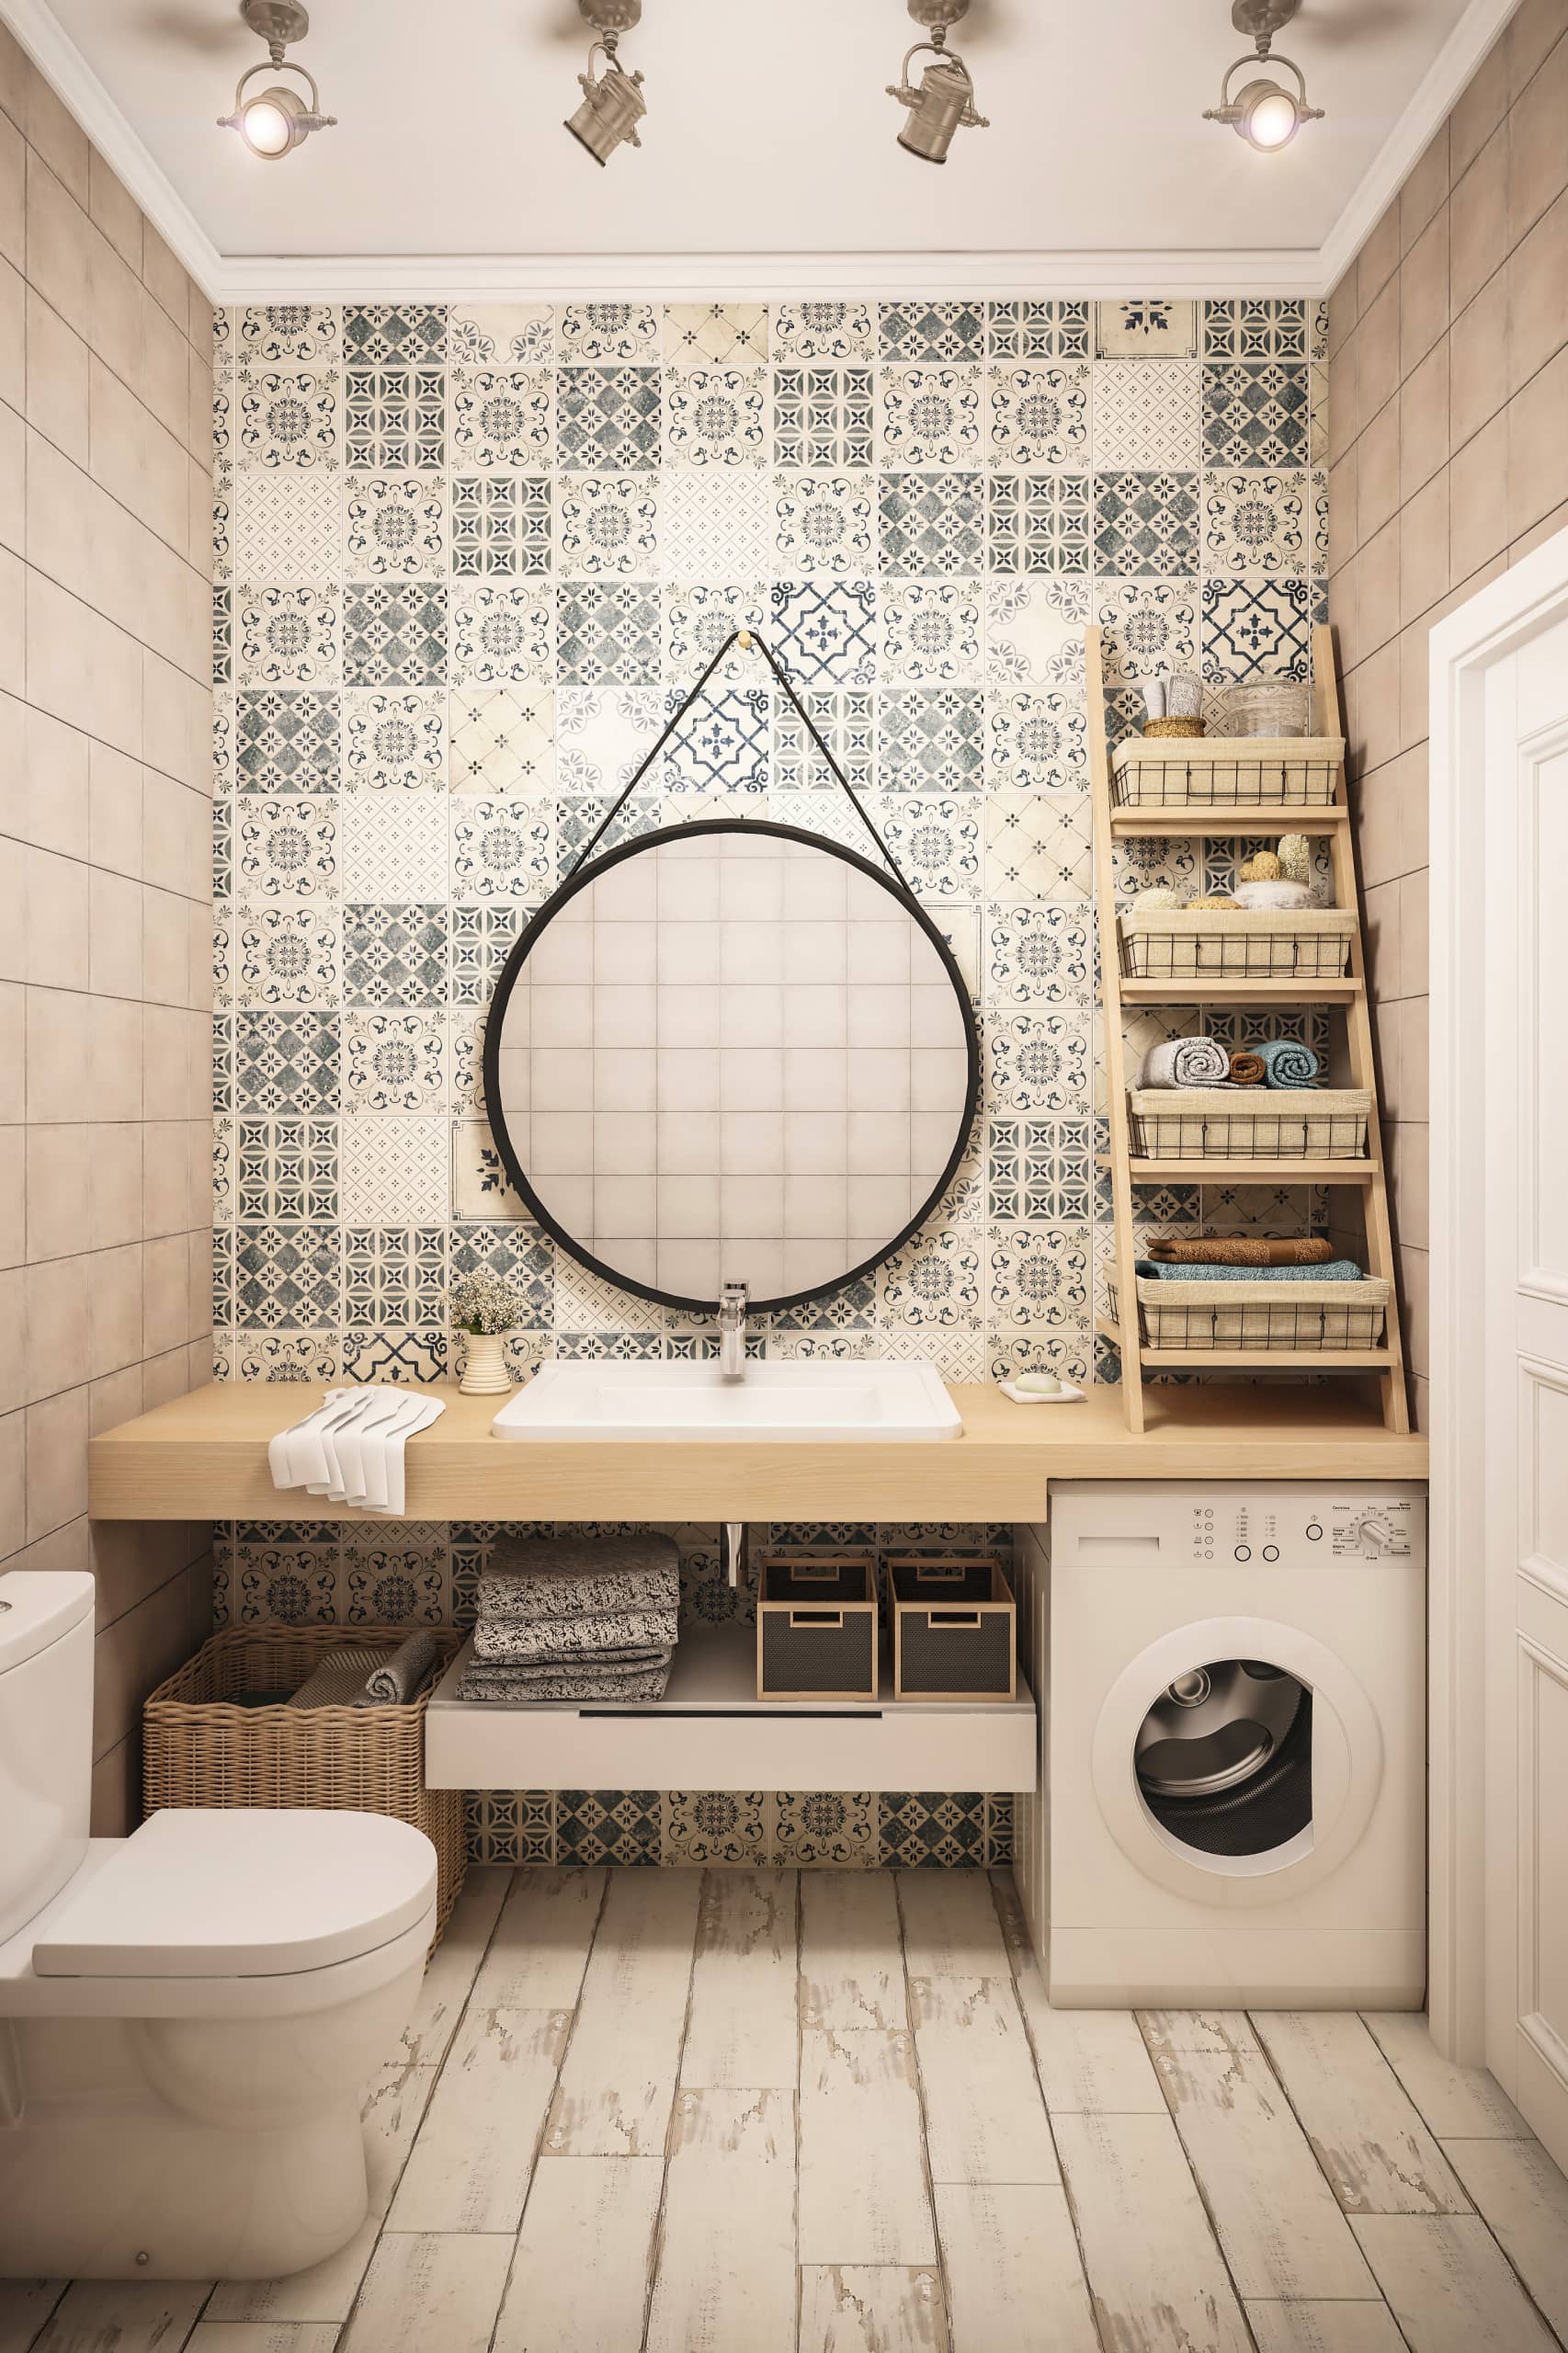 Узорчатая плитка на стене в ванной комнате где висит зеркало